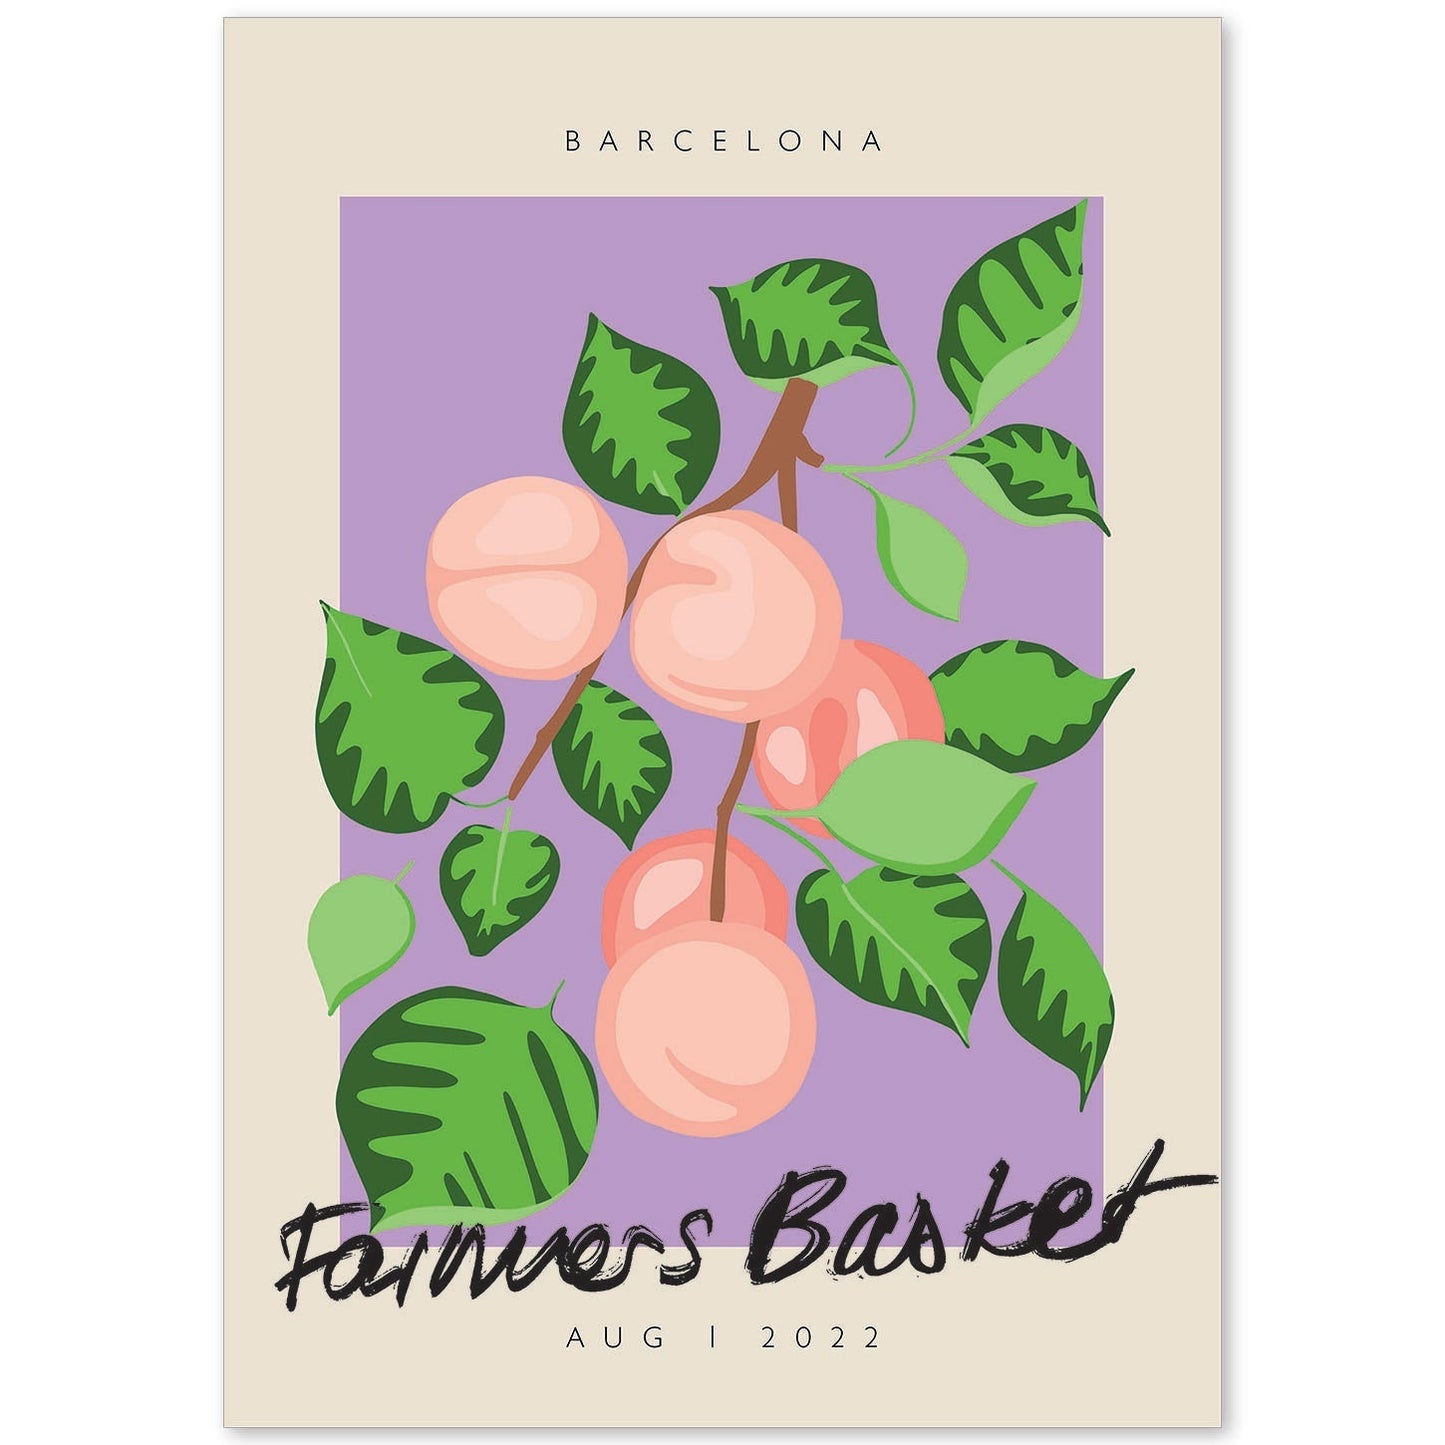 Lamina artistica decorativa con ilustración de Cesta de agricultores Barcelona-Artwork-Nacnic-A4-Sin marco-Nacnic Estudio SL